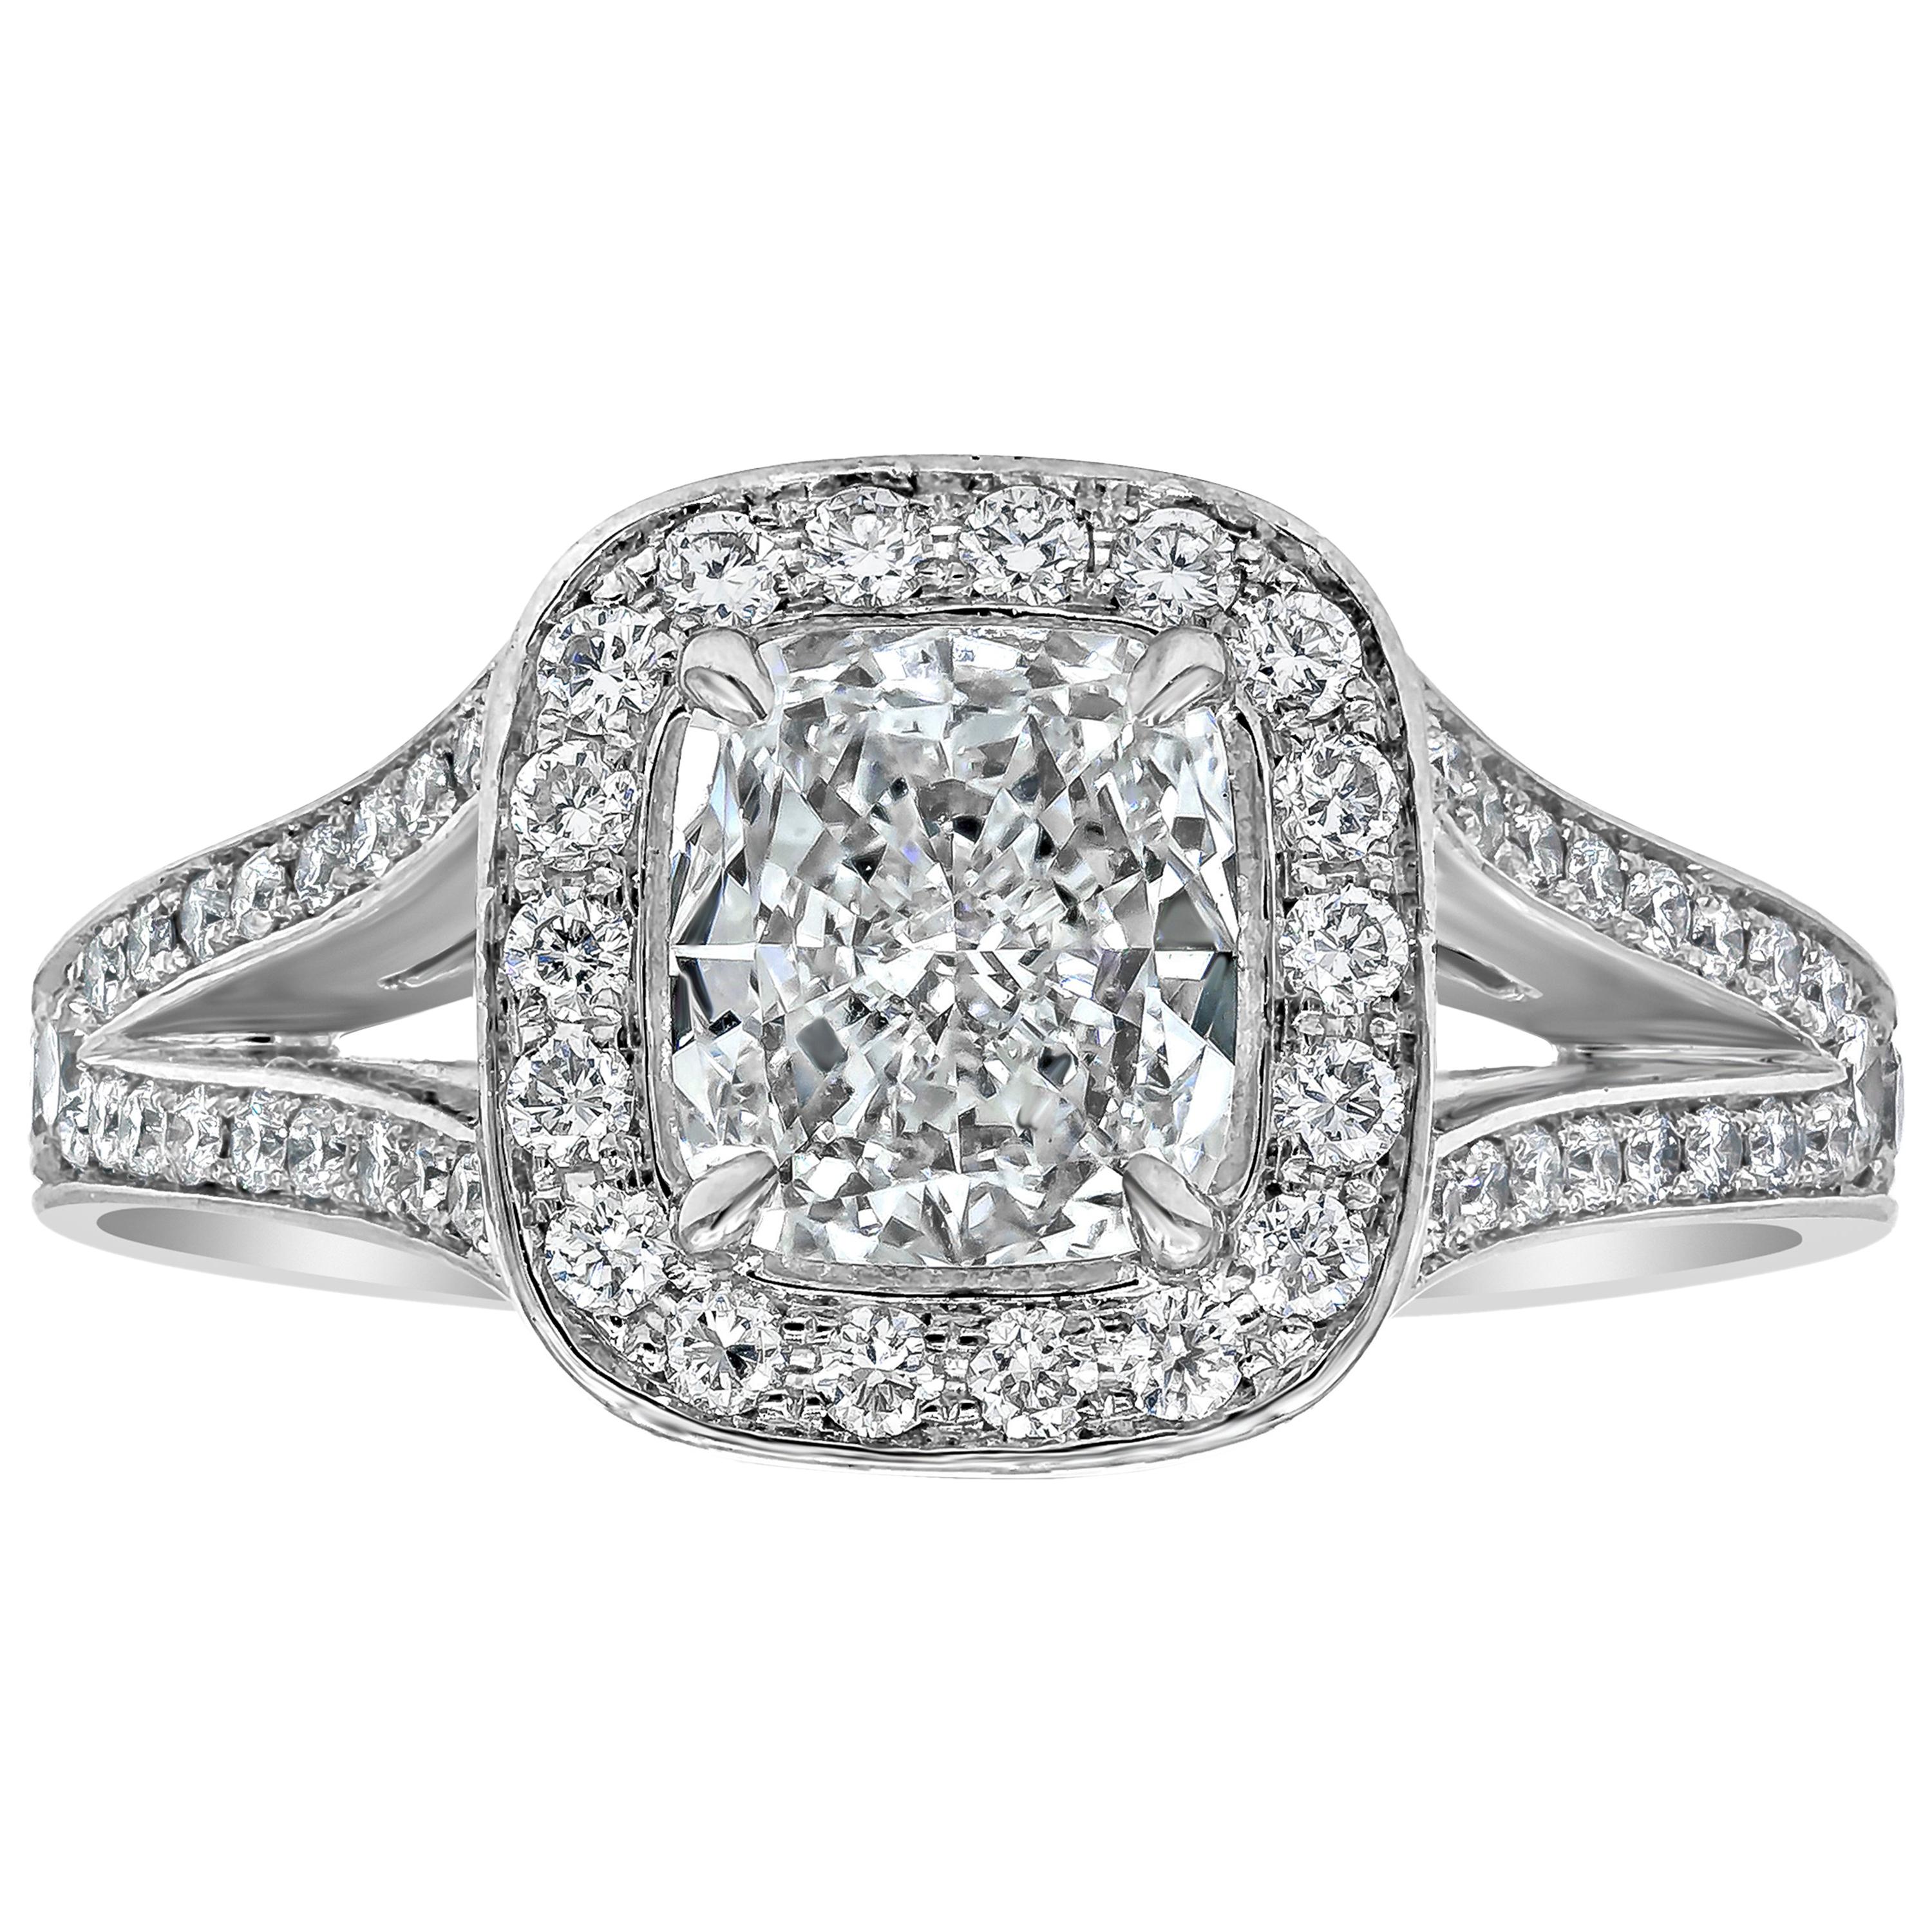 Roman Malakov GIA Certified 1.22 Carats Cushion Cut Diamond Halo Engagement Ring